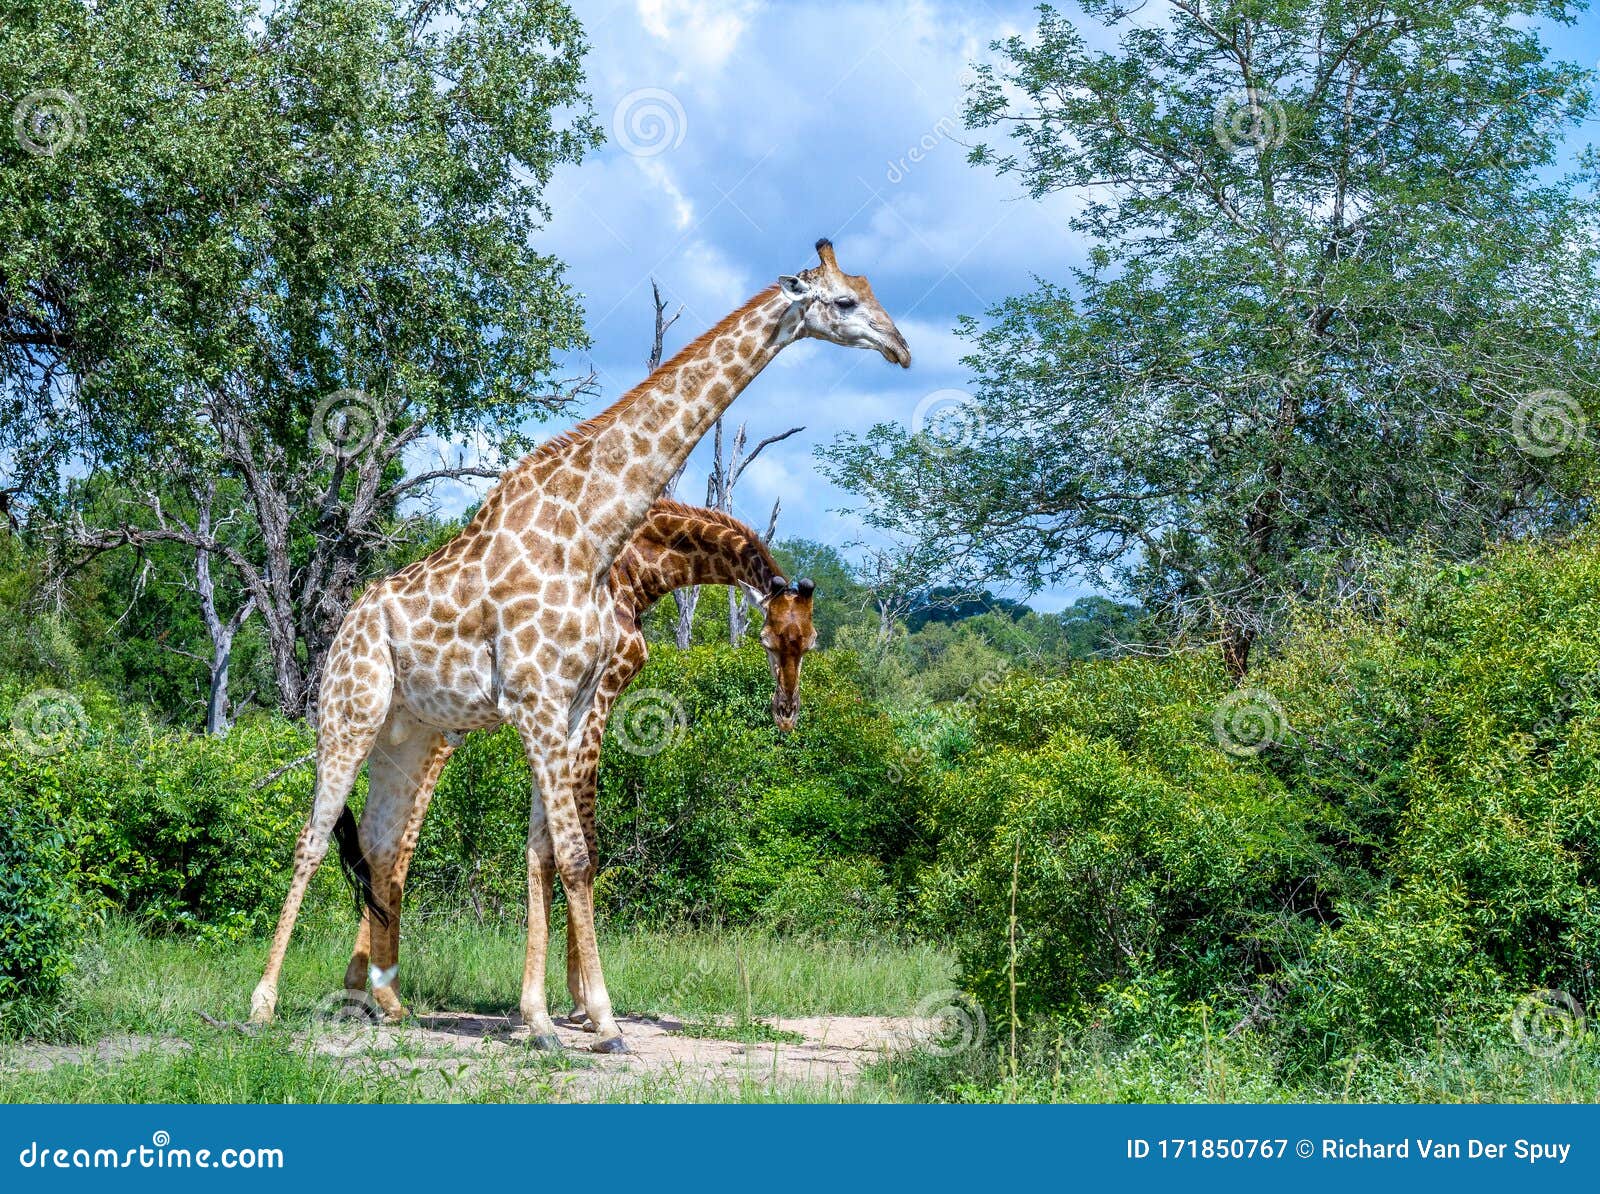 two giraffes necking in the bush